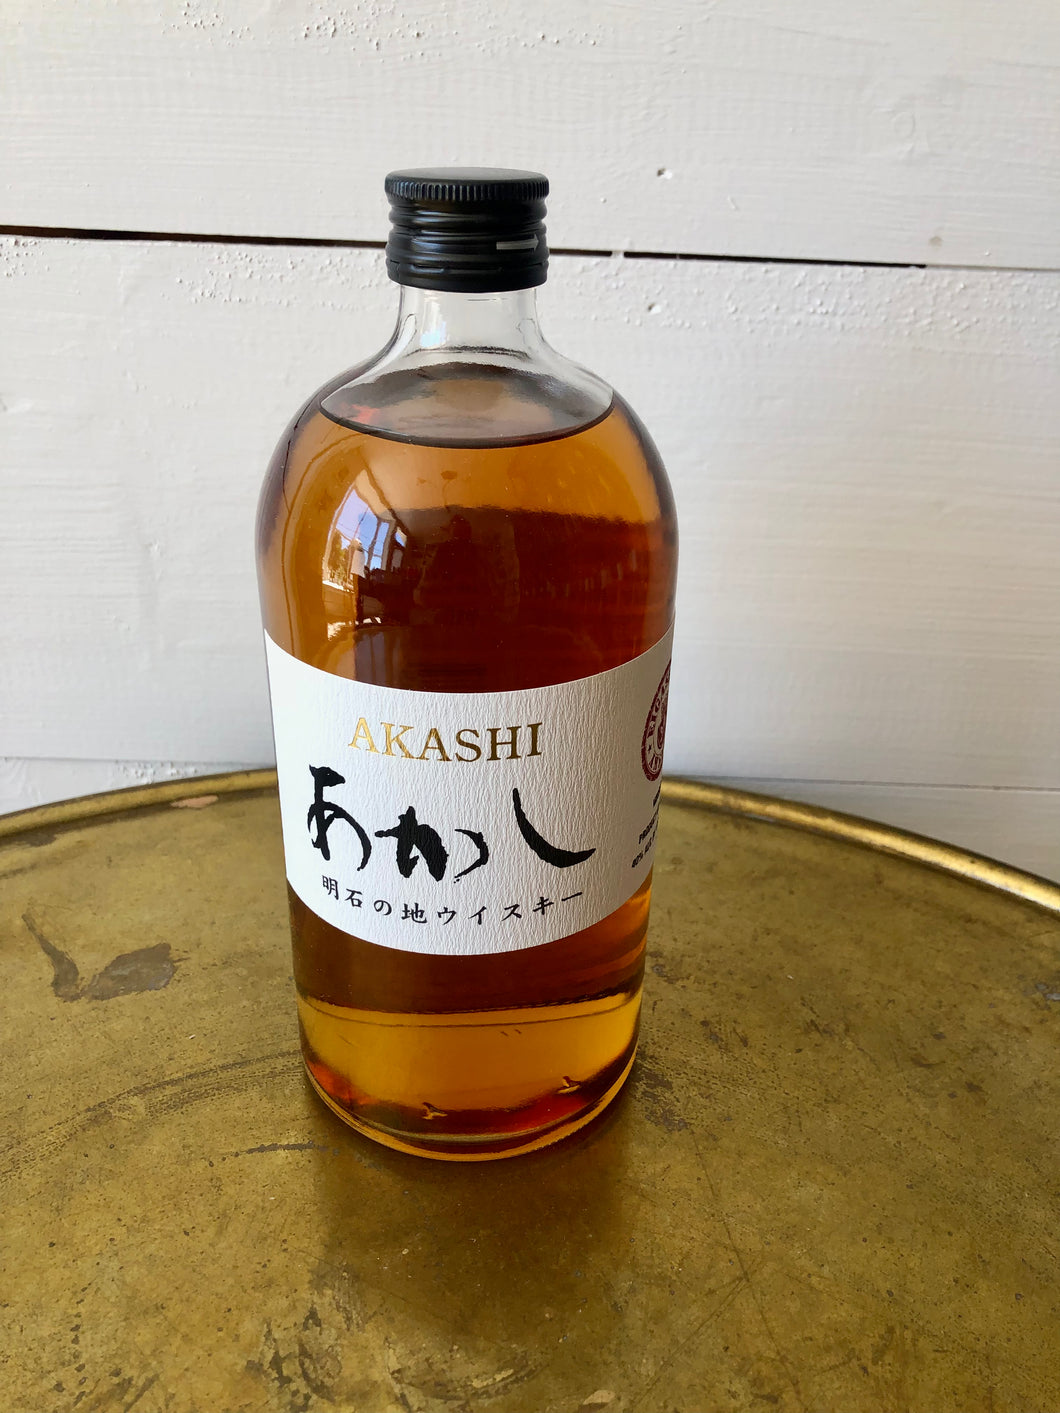 Akashi White Oak Blended Whiskey